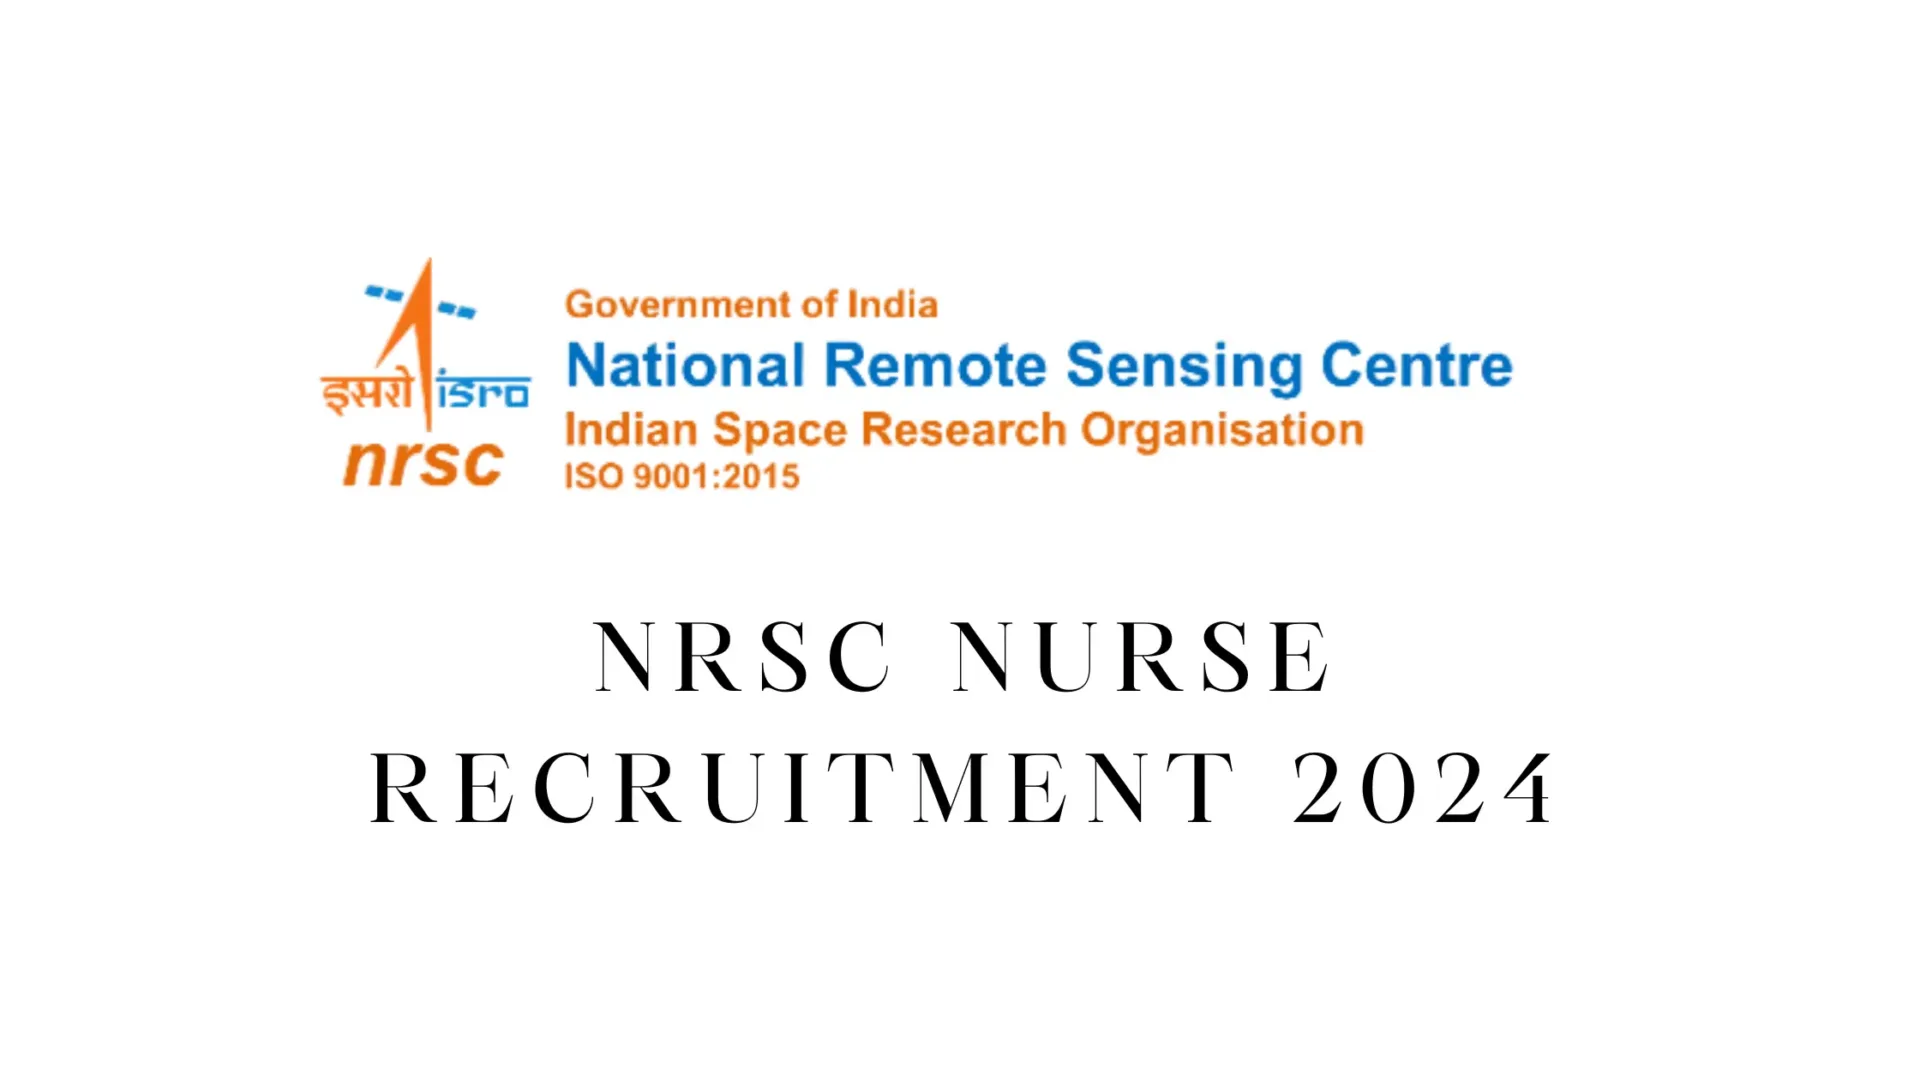 NRSC Nurse Recruitment 2024